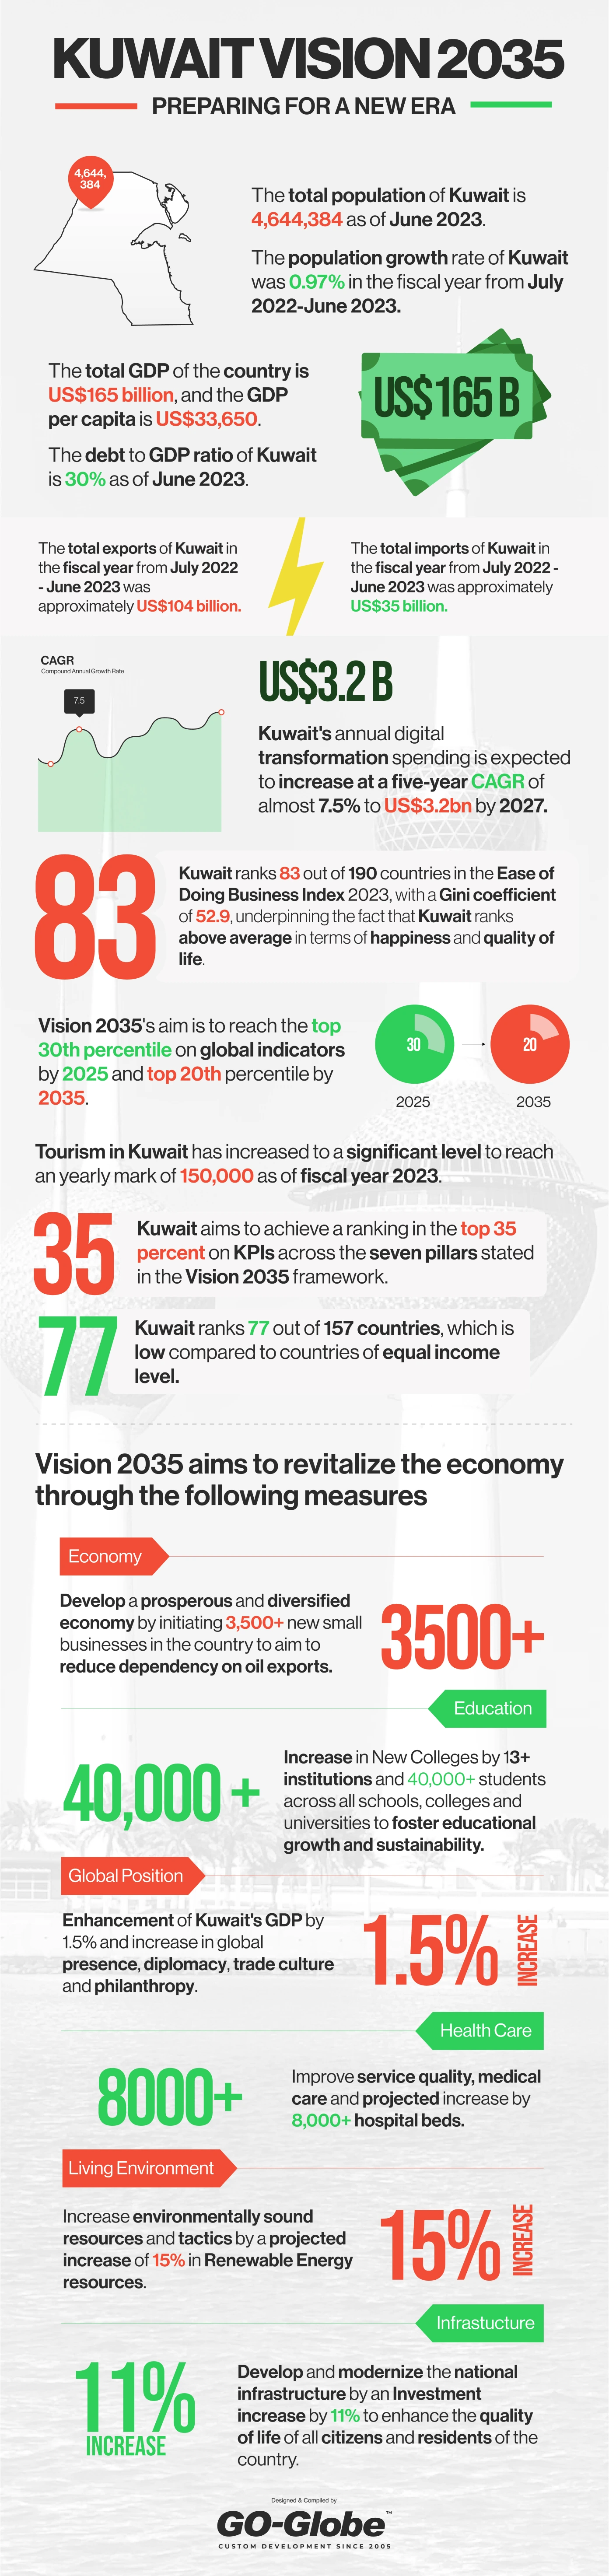 kuwait_vision_2035